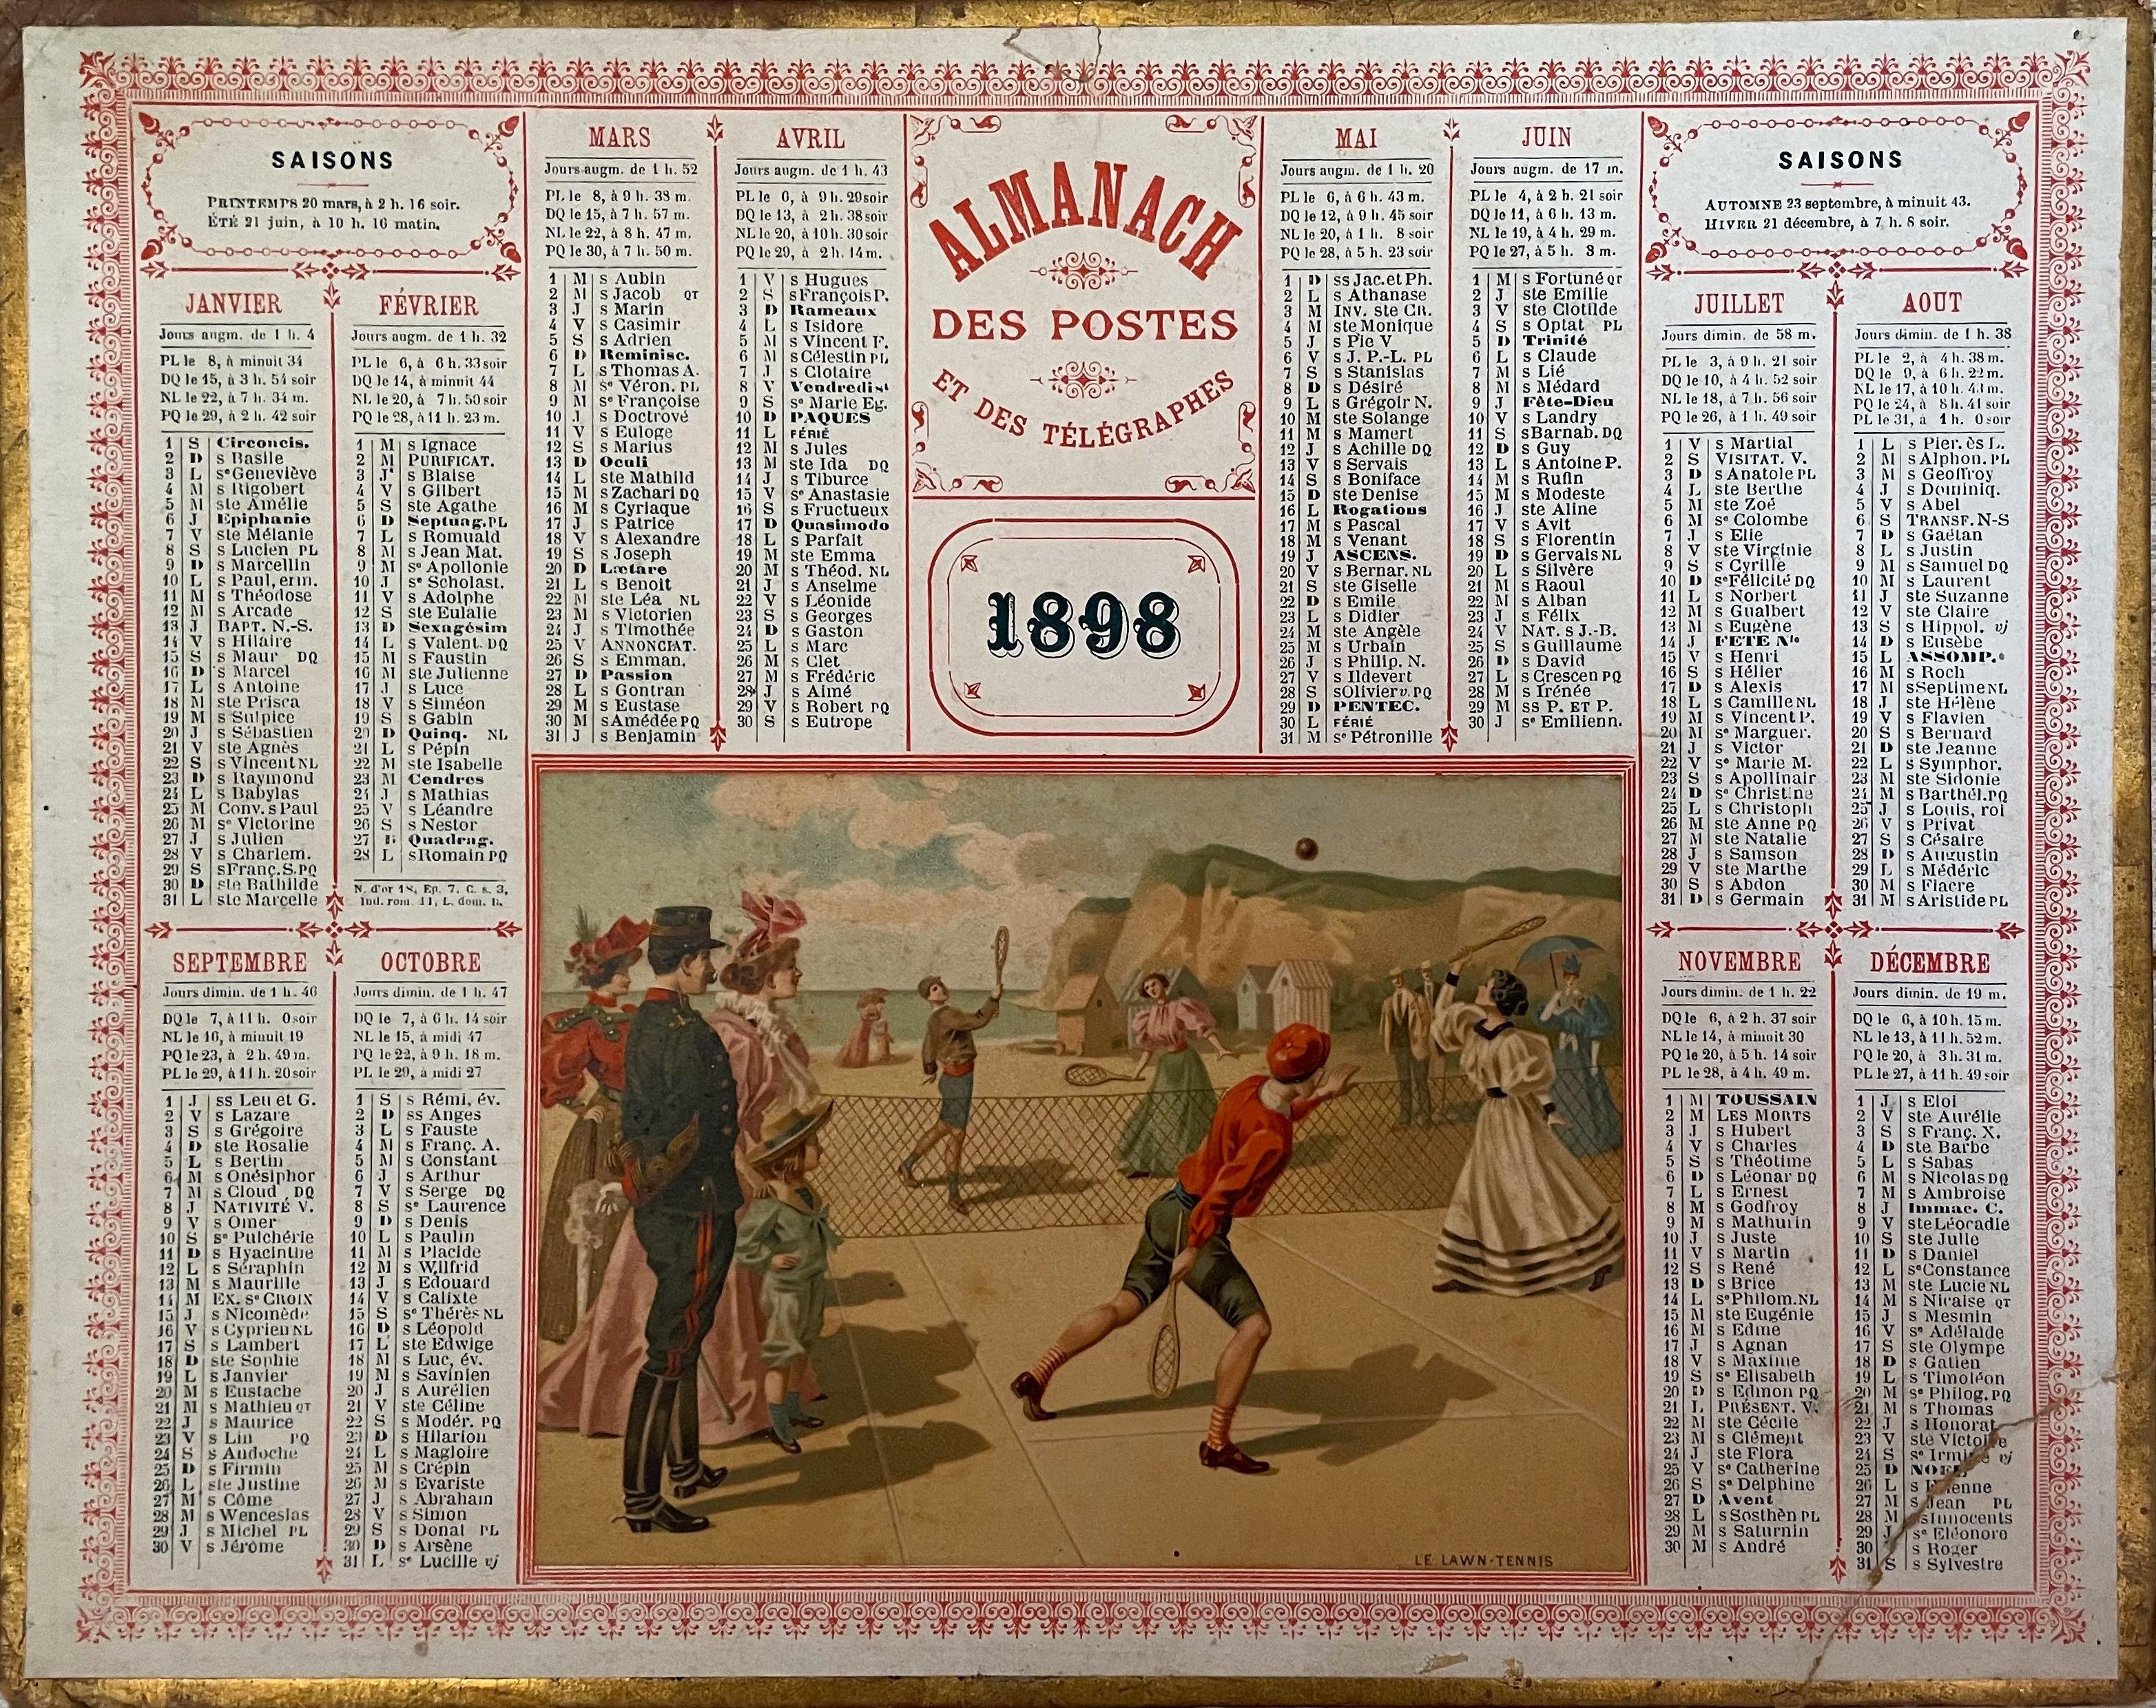 Calendrier de la Poste de 1950  Calendrier, La poste, Calendrier